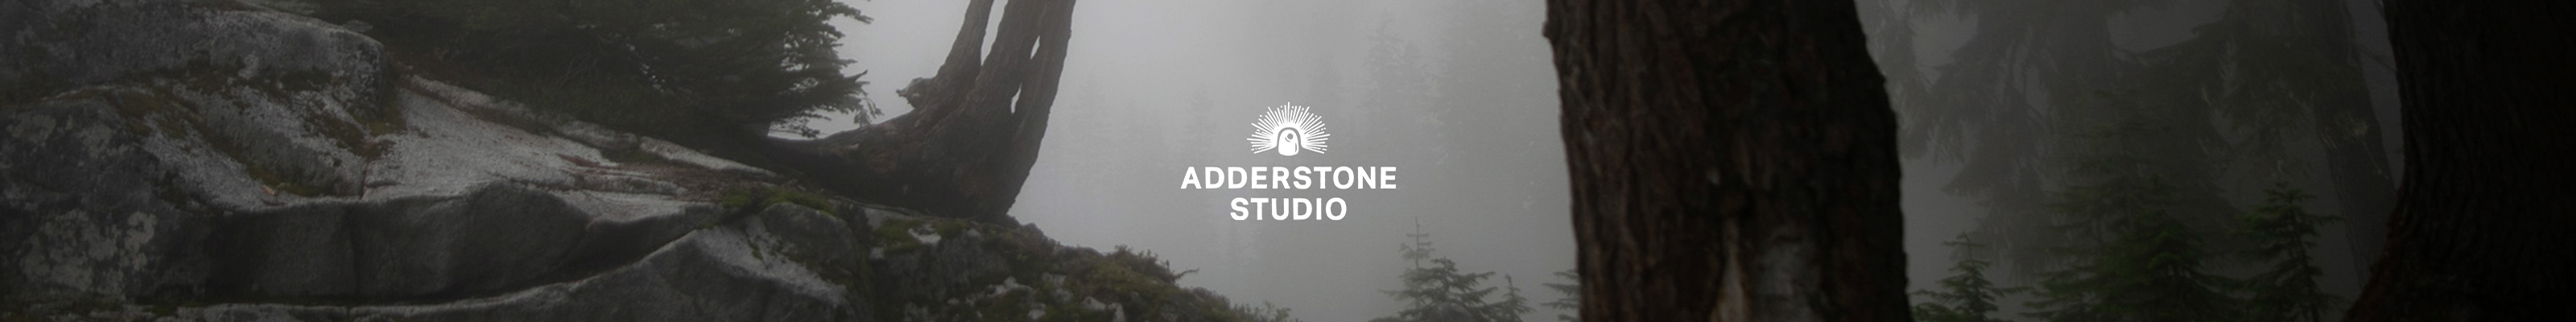 Bannière de profil de Adderstone Studio